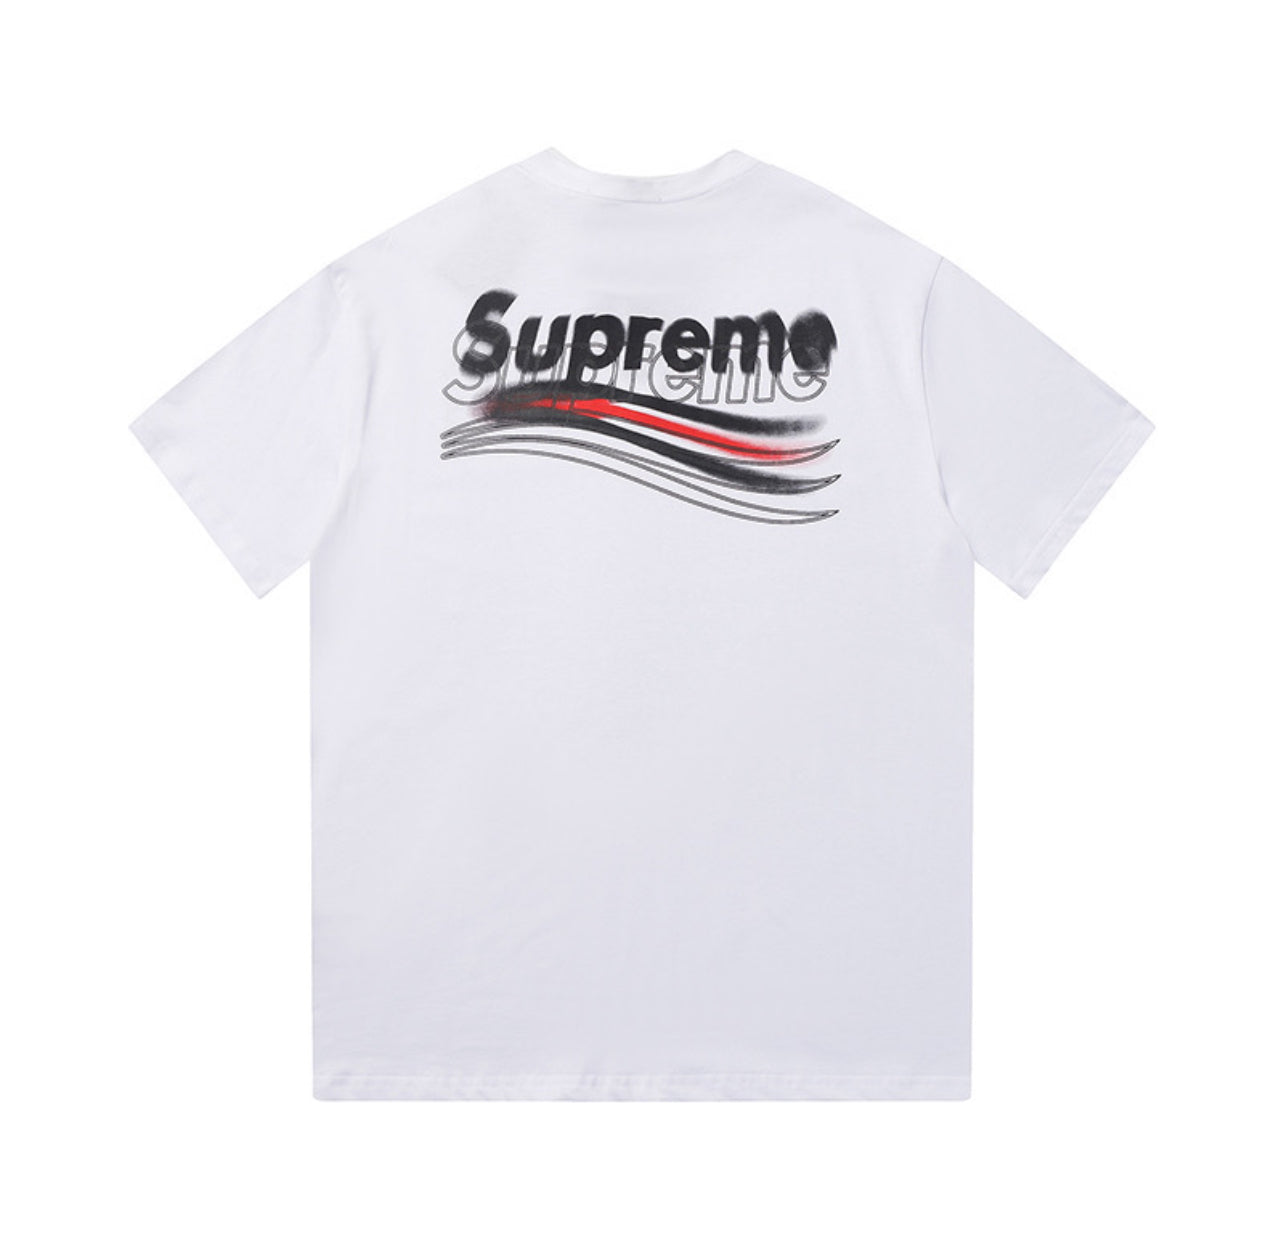 Balanciaga-Supreme T-Shirt